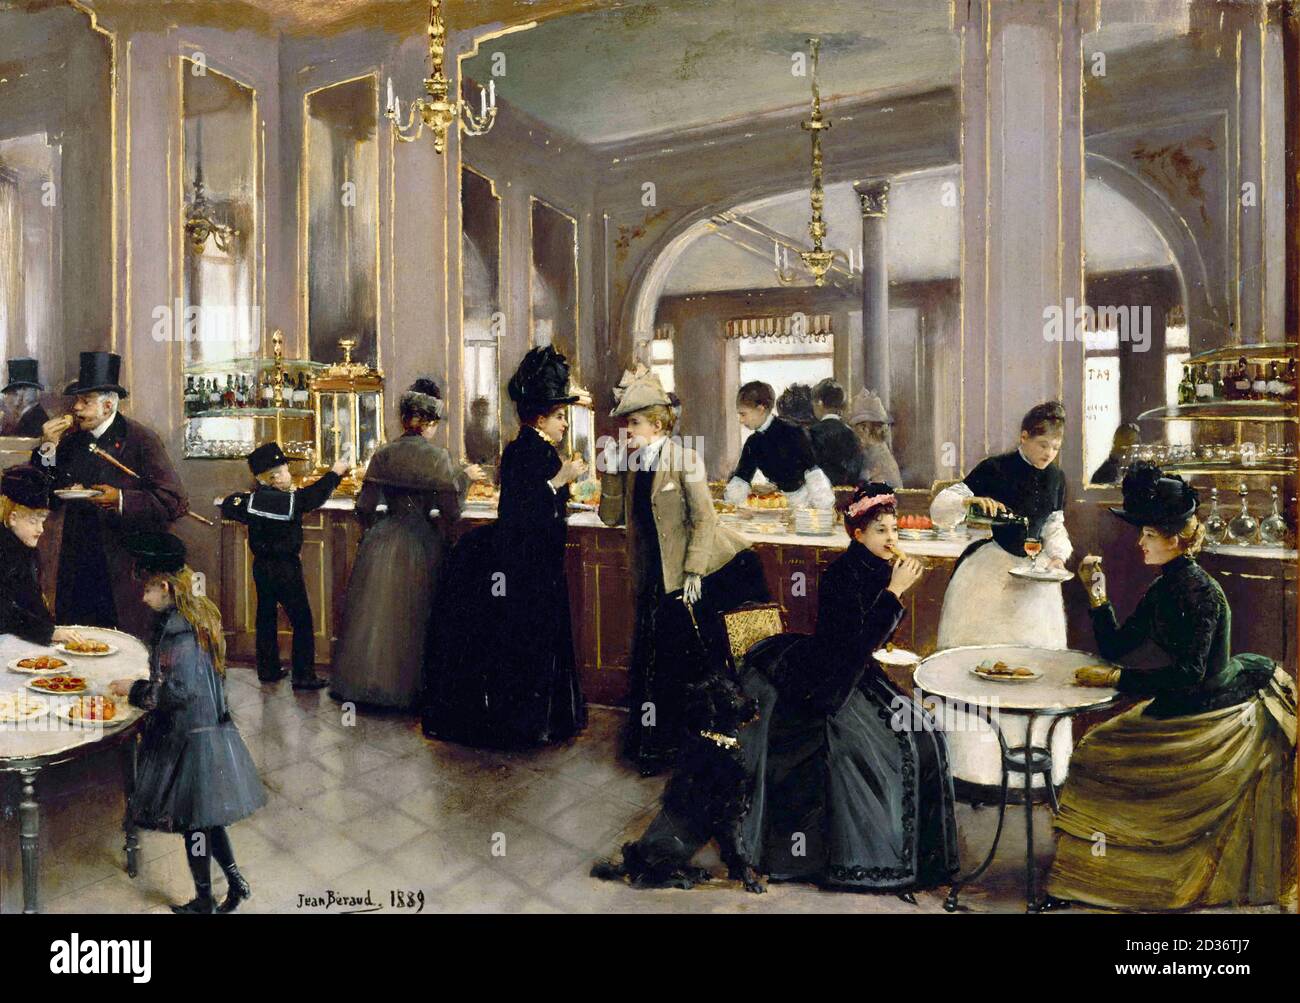 Jean Béraud. Painting entitled 'La Pâtisserie Gloppe', oil on canvas, c. 1889 by Jean Beraud (1849-1935). Paris cafe interior, 19th century. Stock Photo